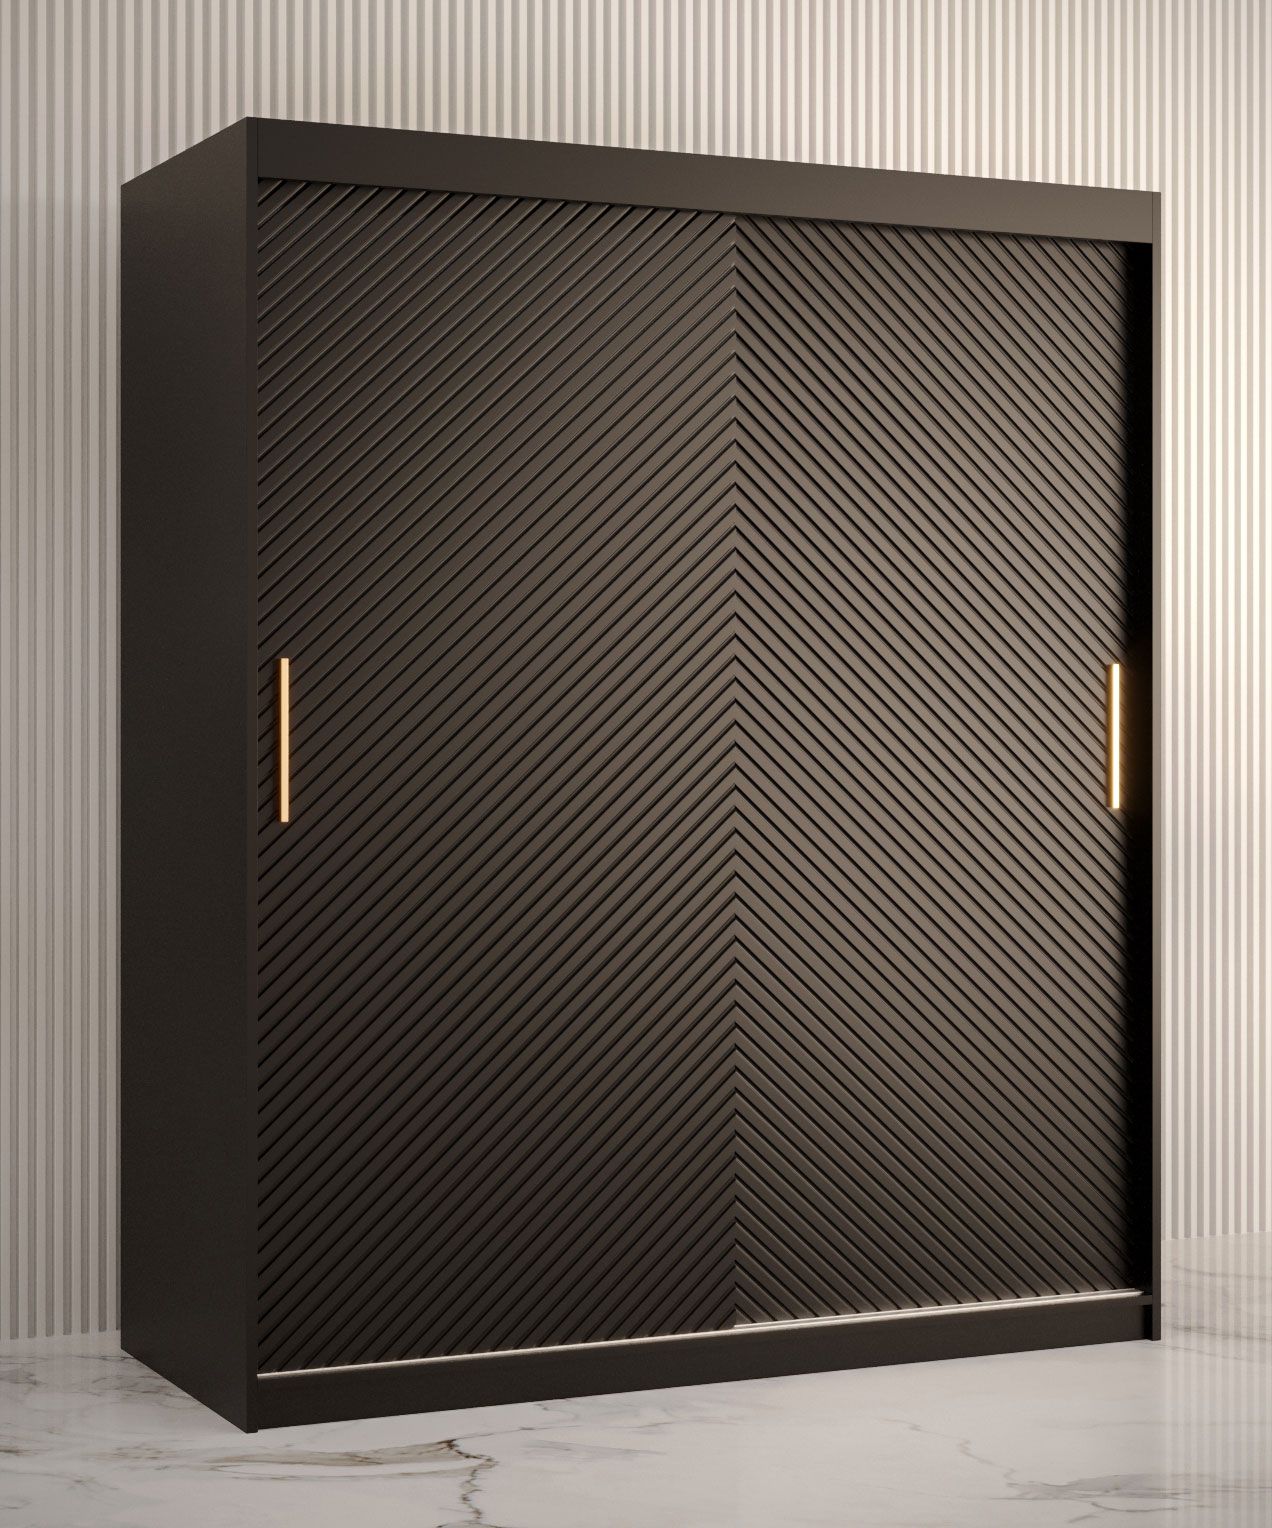 Kledingkast met vijf vakken Balmenhorn 12, kleur: mat zwart - afmetingen: 200 x 150 x 62 cm (H x B x D), met voldoende opbergruimte